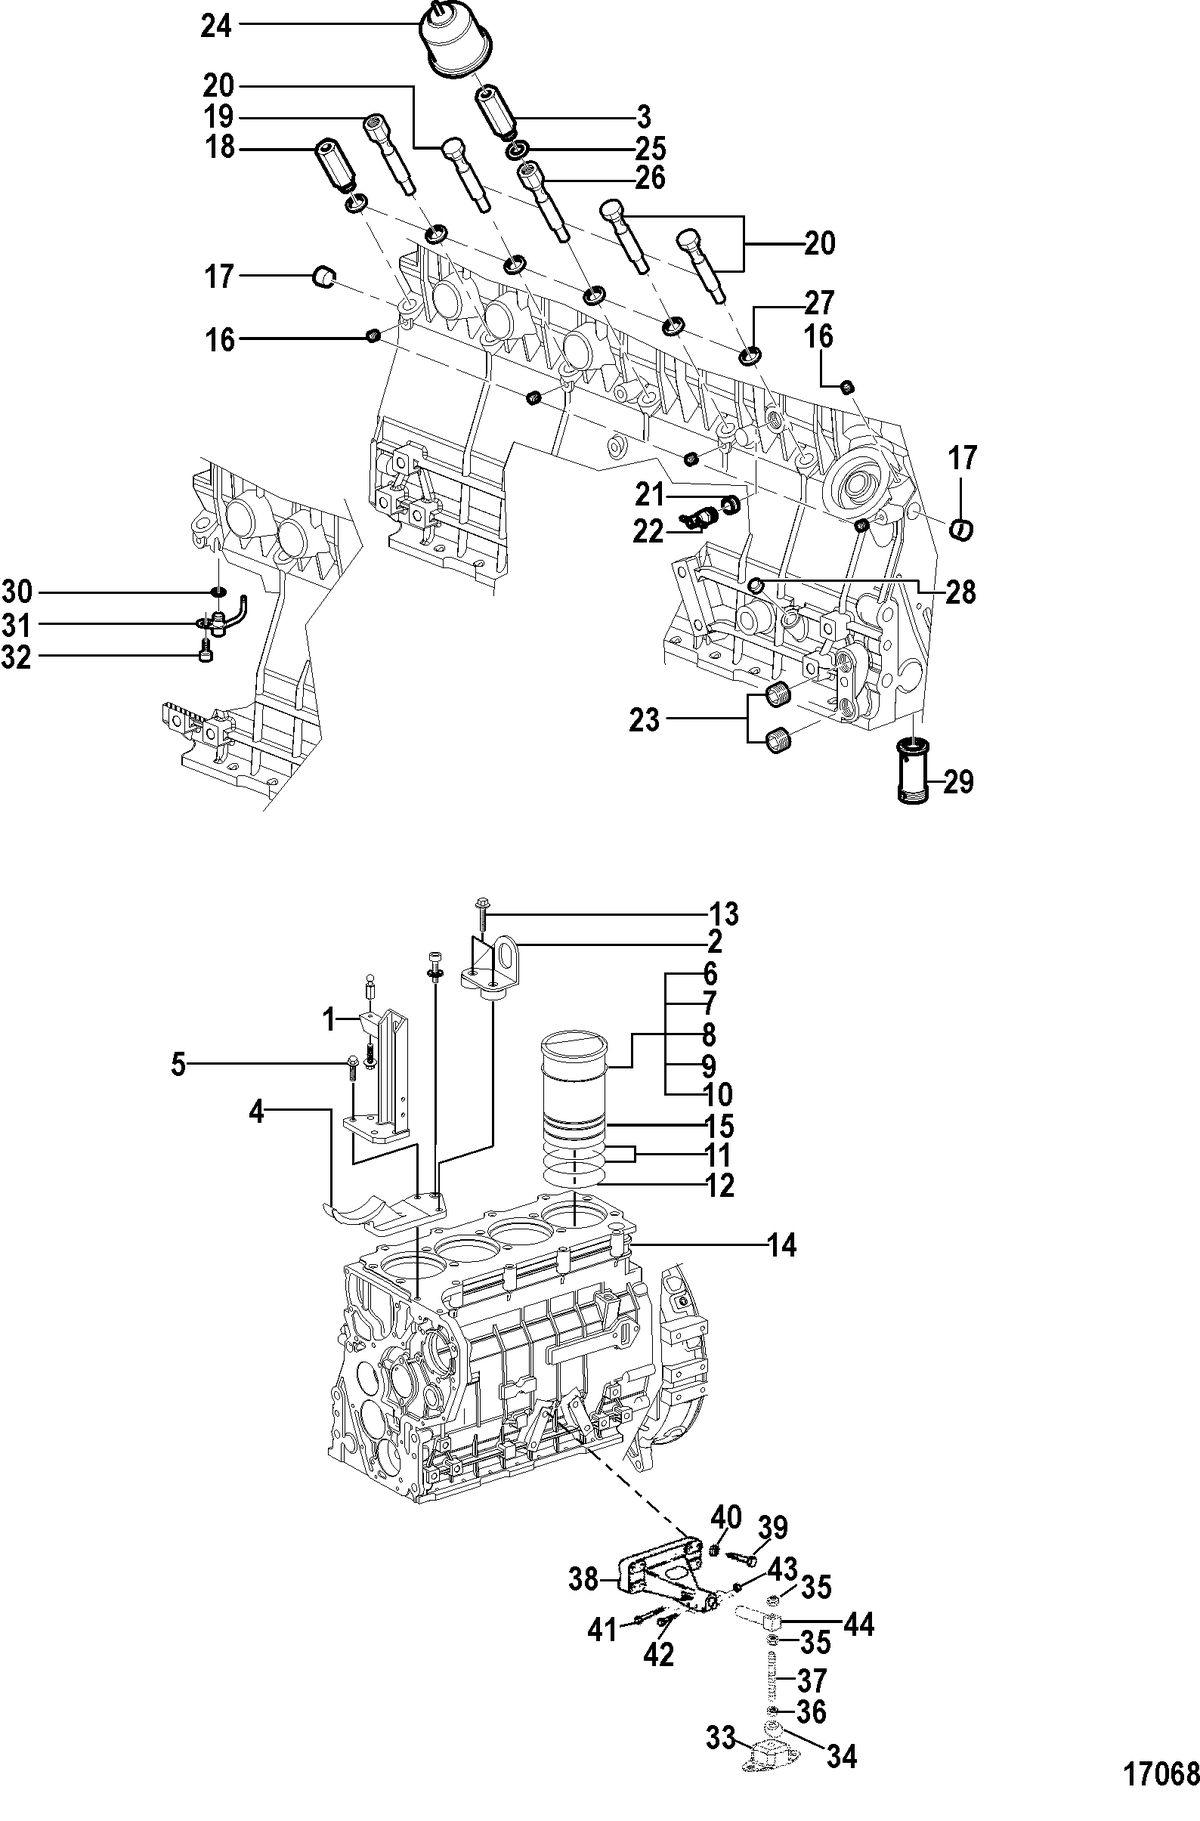 MERCRUISER CUMMINS/MERCRUISER 4.2 UNIFICATION Engine and Cylinder Block